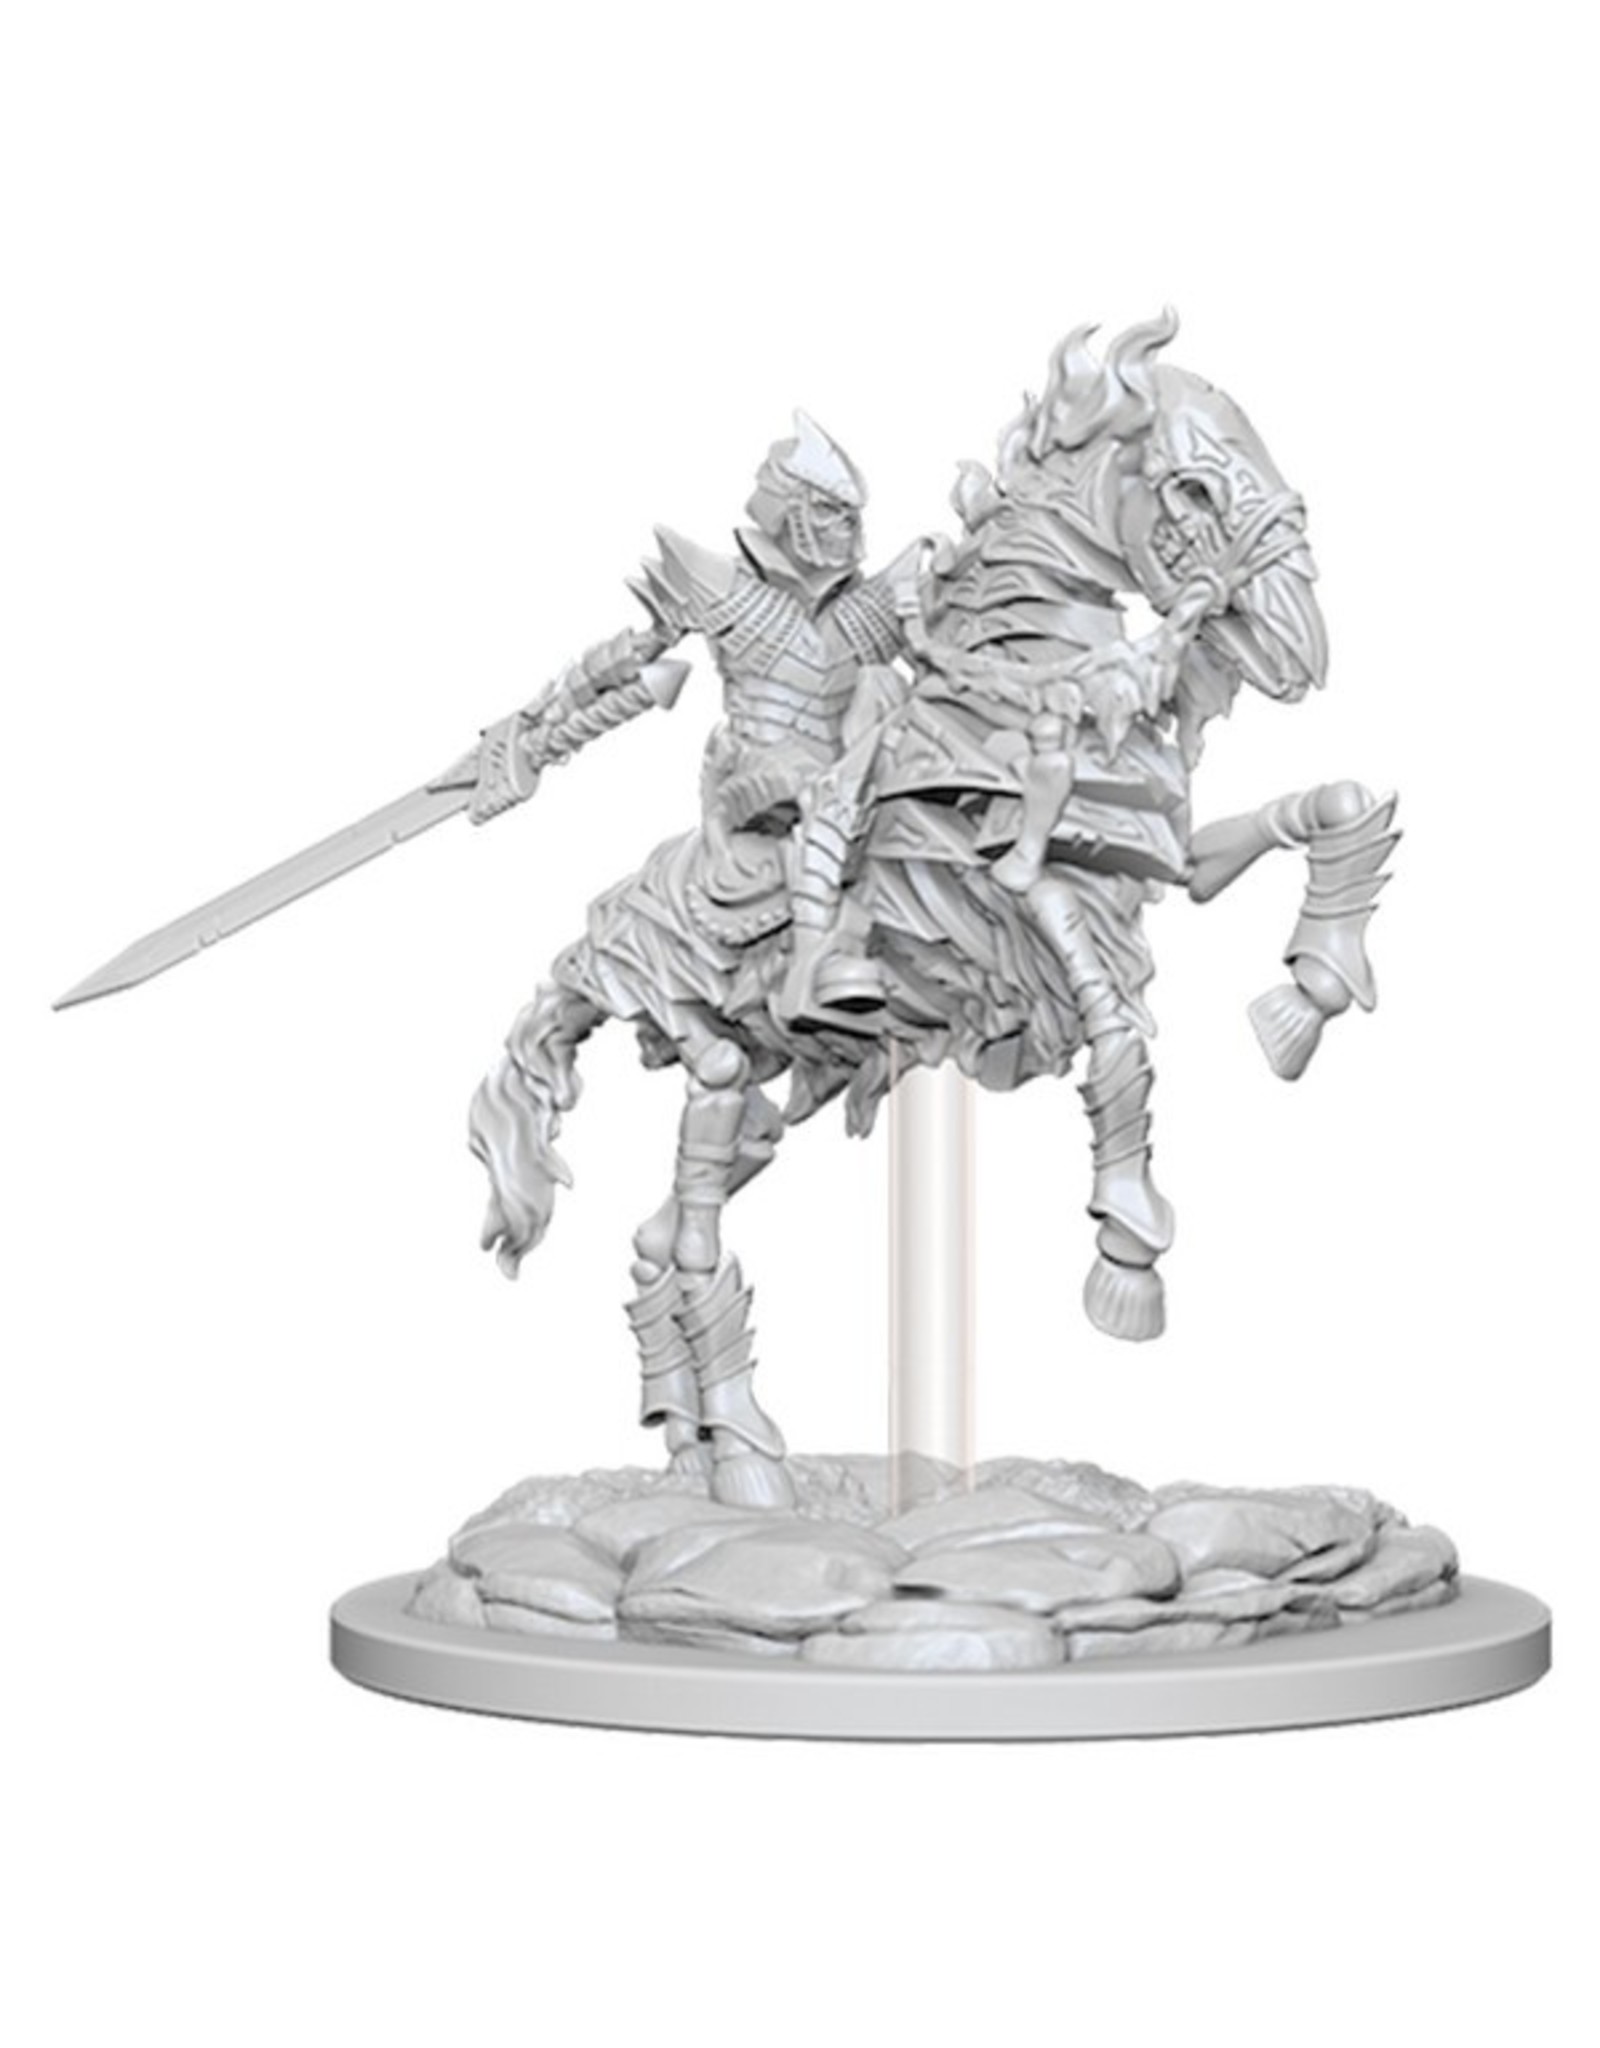 WizKids PF DC: Skeleton Knight on Horse W5